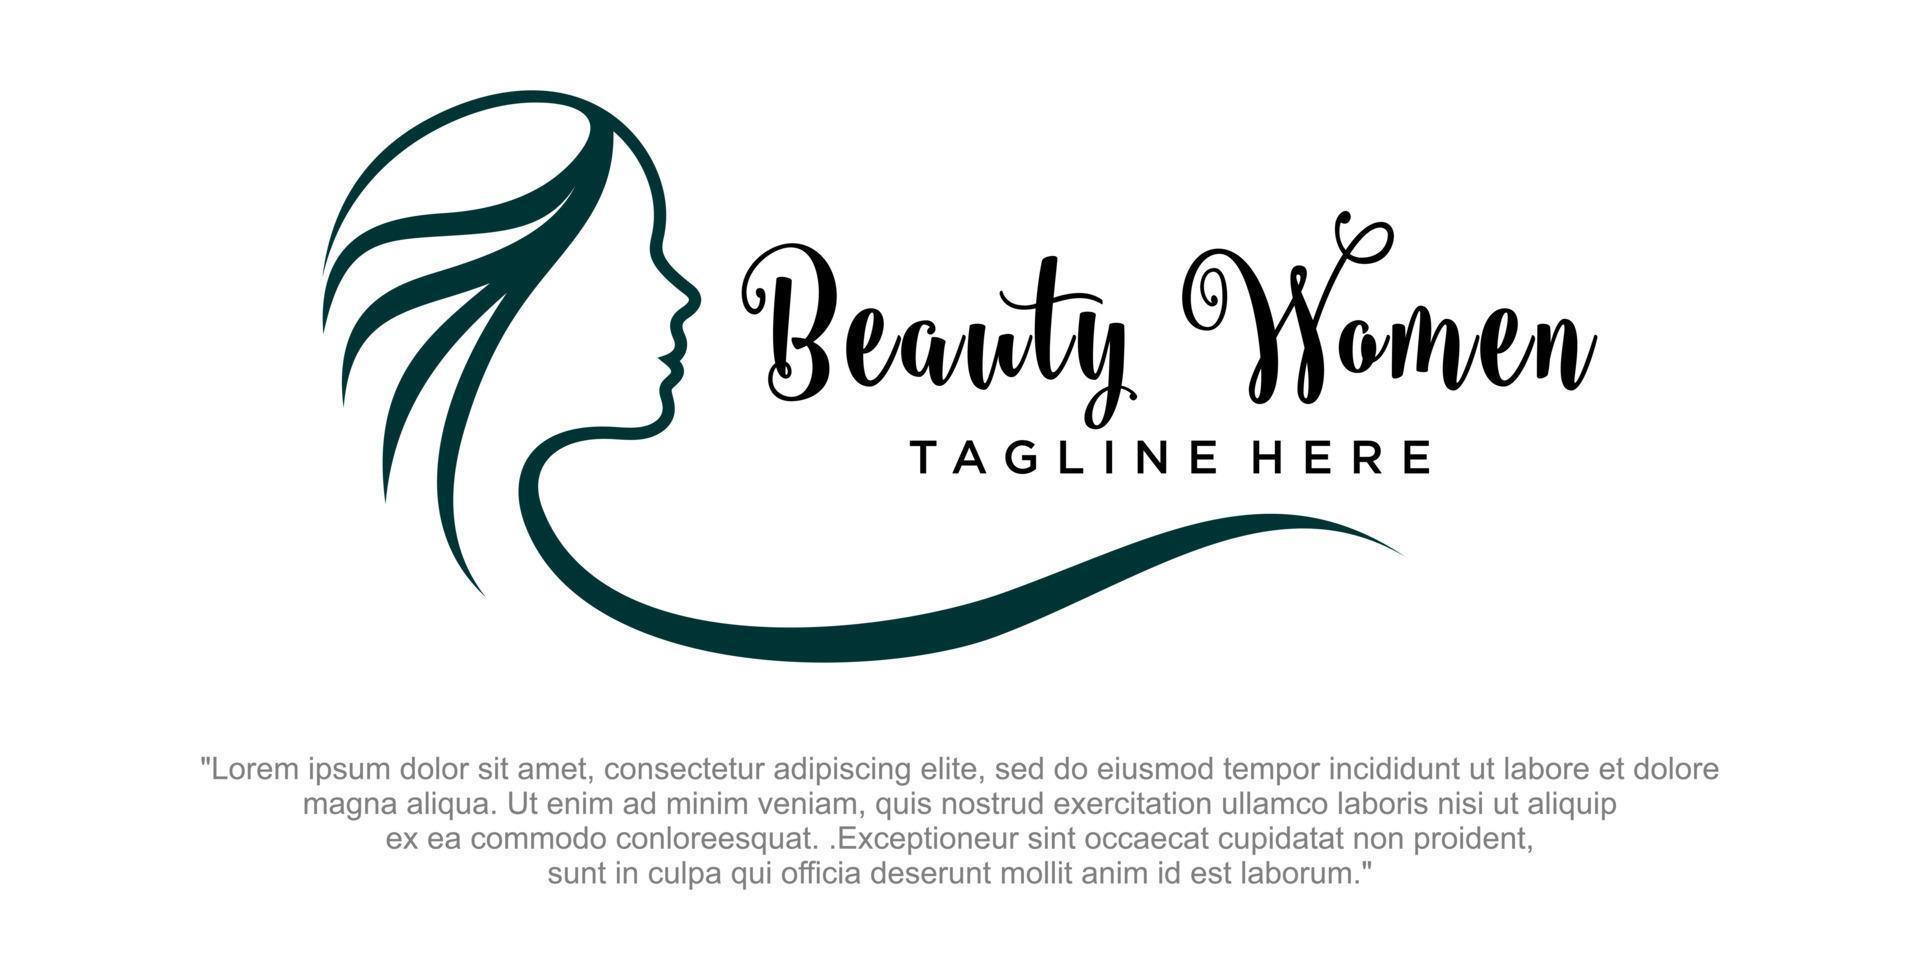 diseño de logotipo de belleza capilar para salón, cambio de imagen, estilista, peluquero, corte de pelo. vector